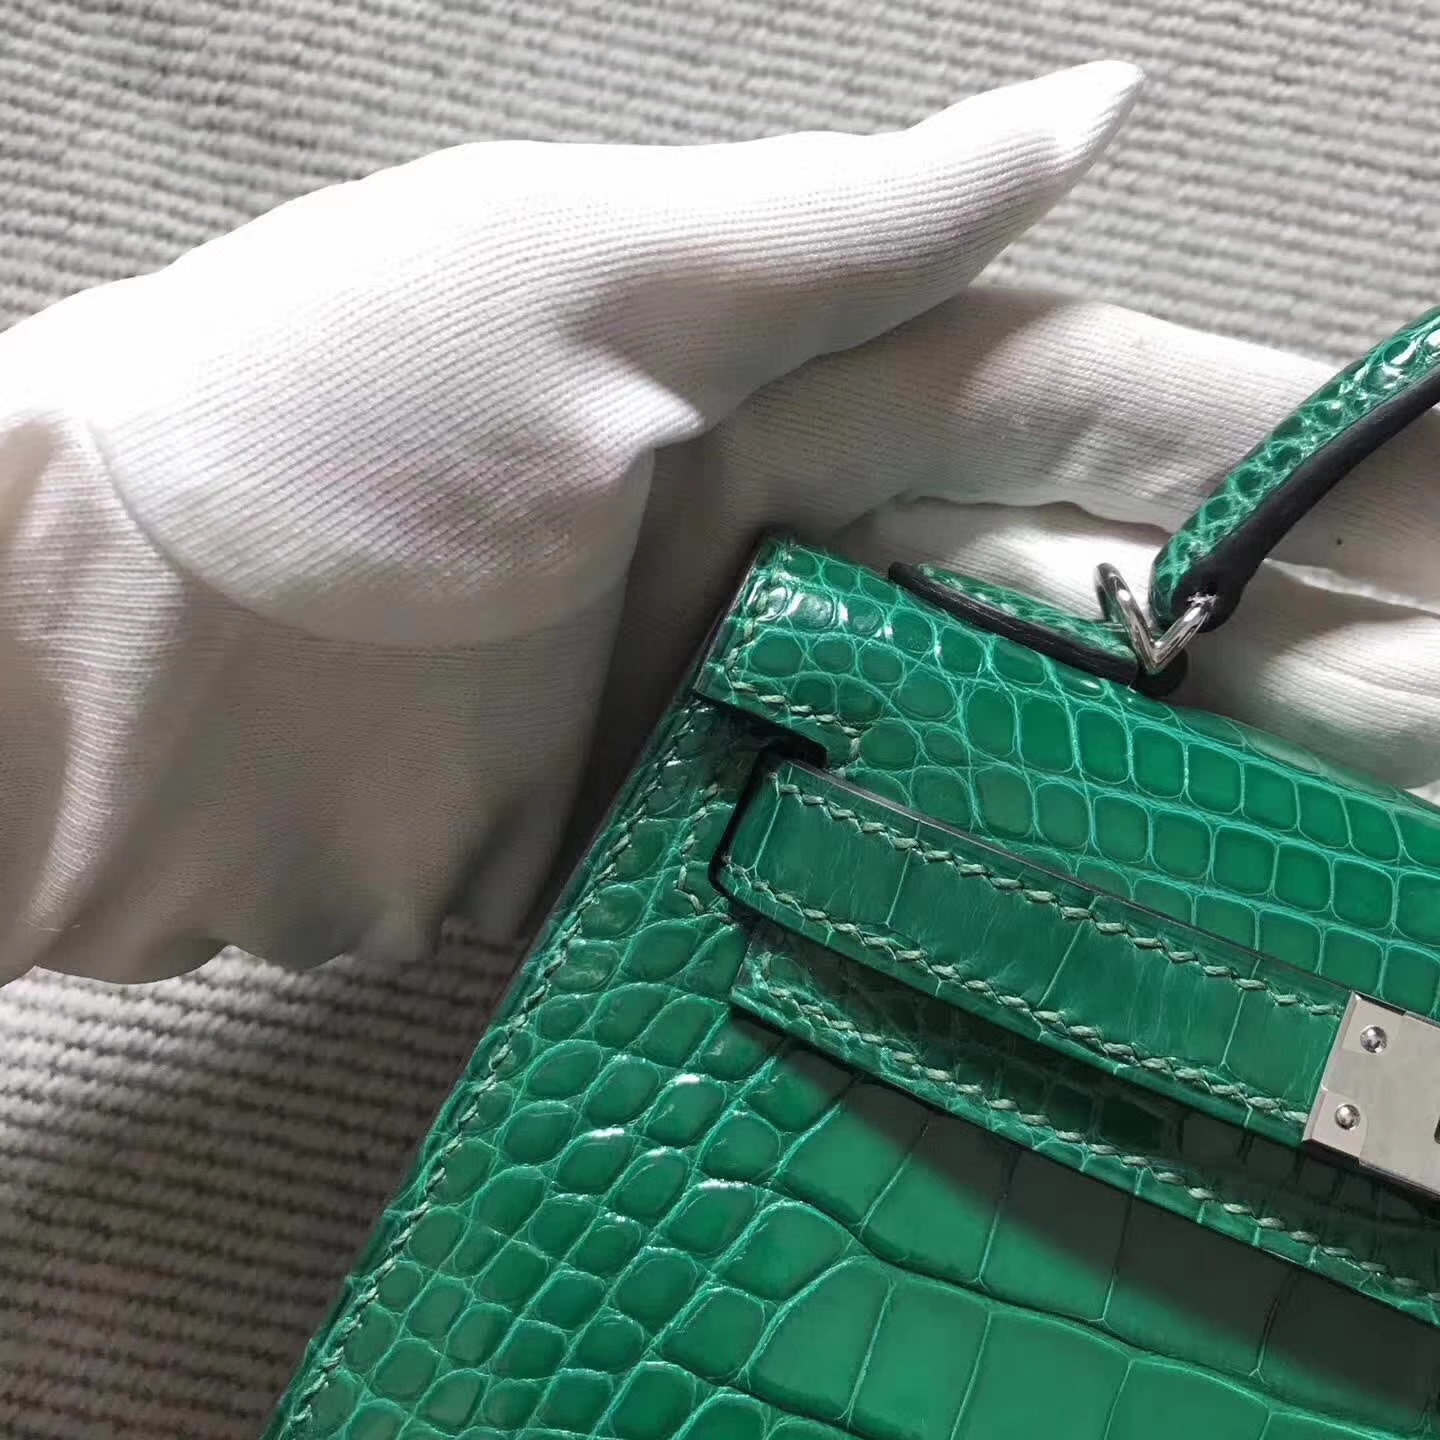 Fashion Hermes Vert Tipien Crocodile Shiny Leather Minikelly-2 Clutch Bag